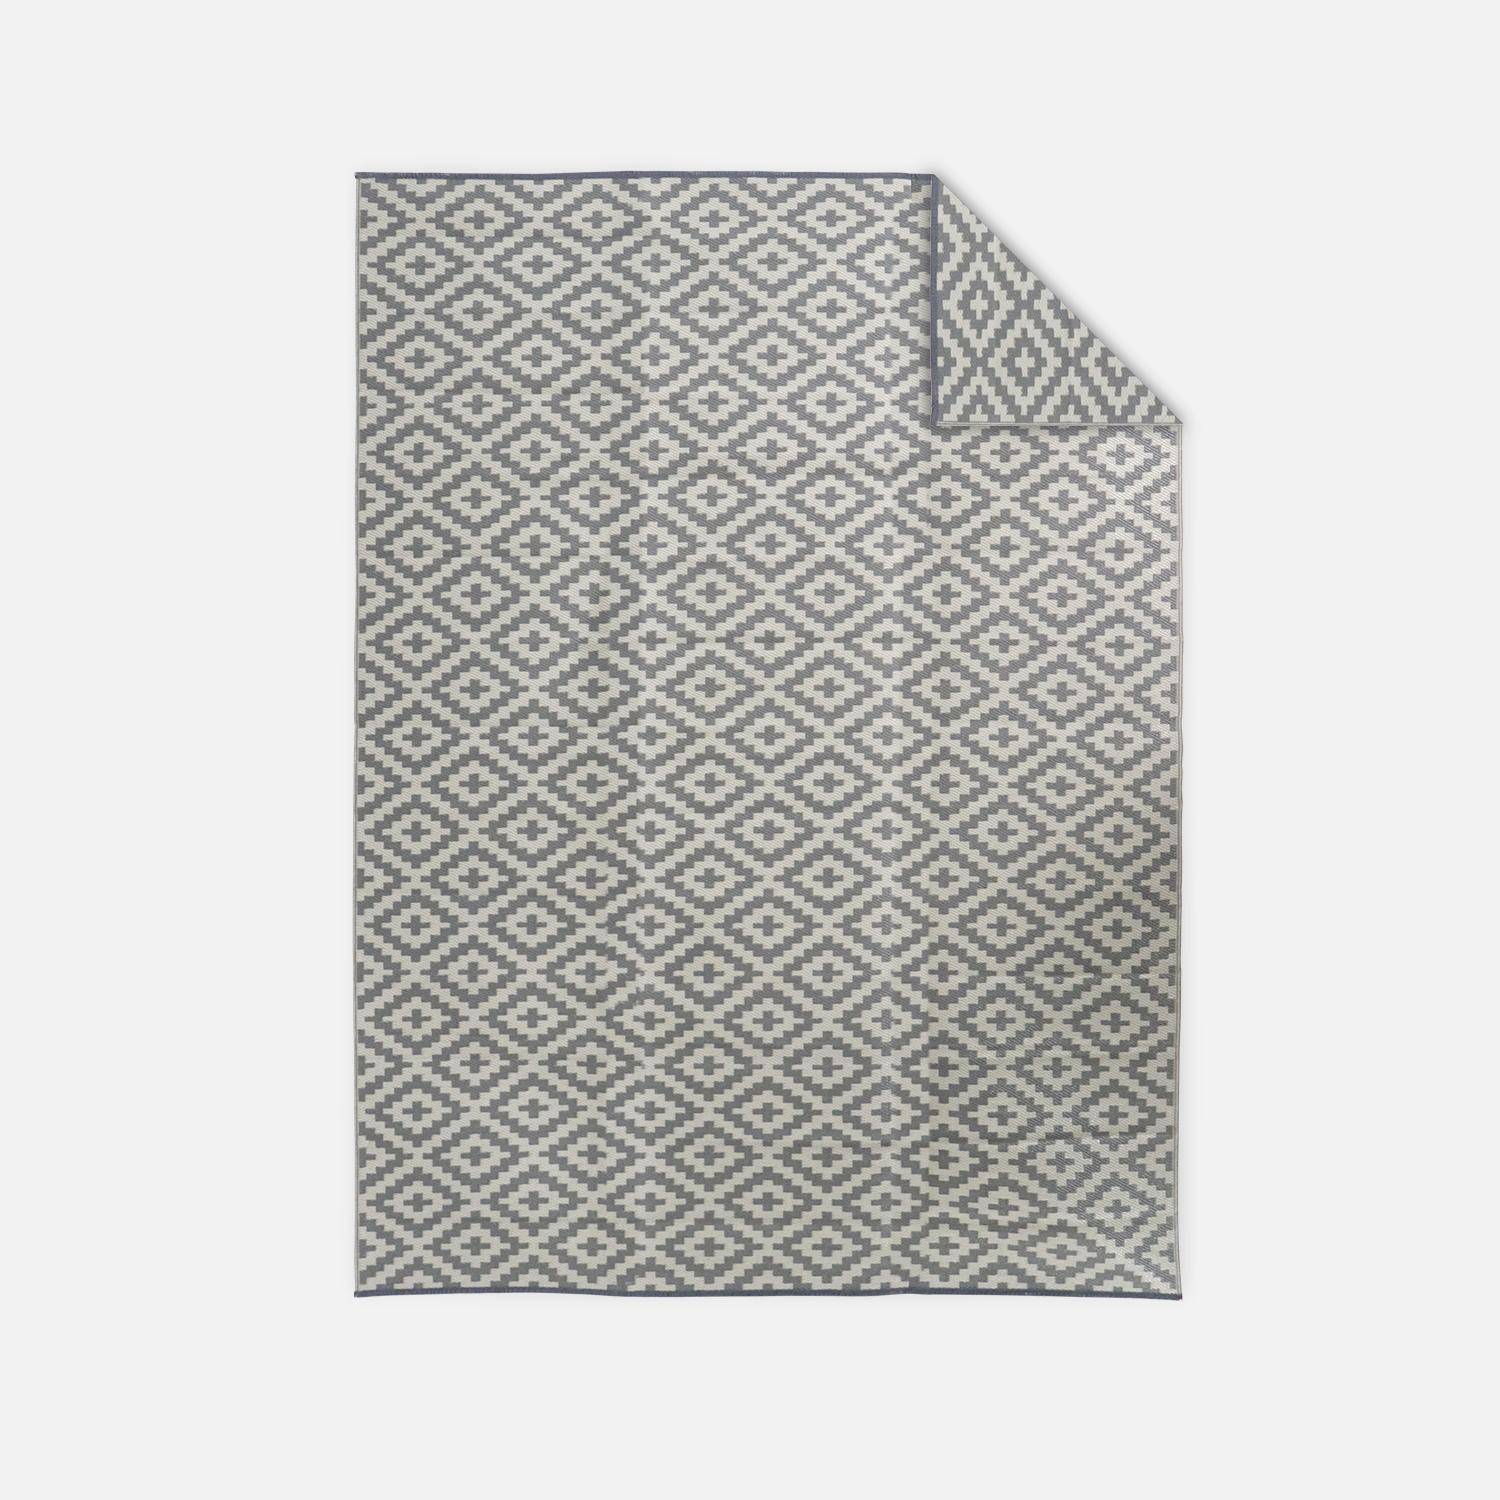 Tappeto per esterni 270x360cm STOCKHOLM - Rettangolare, motivo diamante kaki, jacquard, reversibile, interno/esterno,,sweeek,Photo1